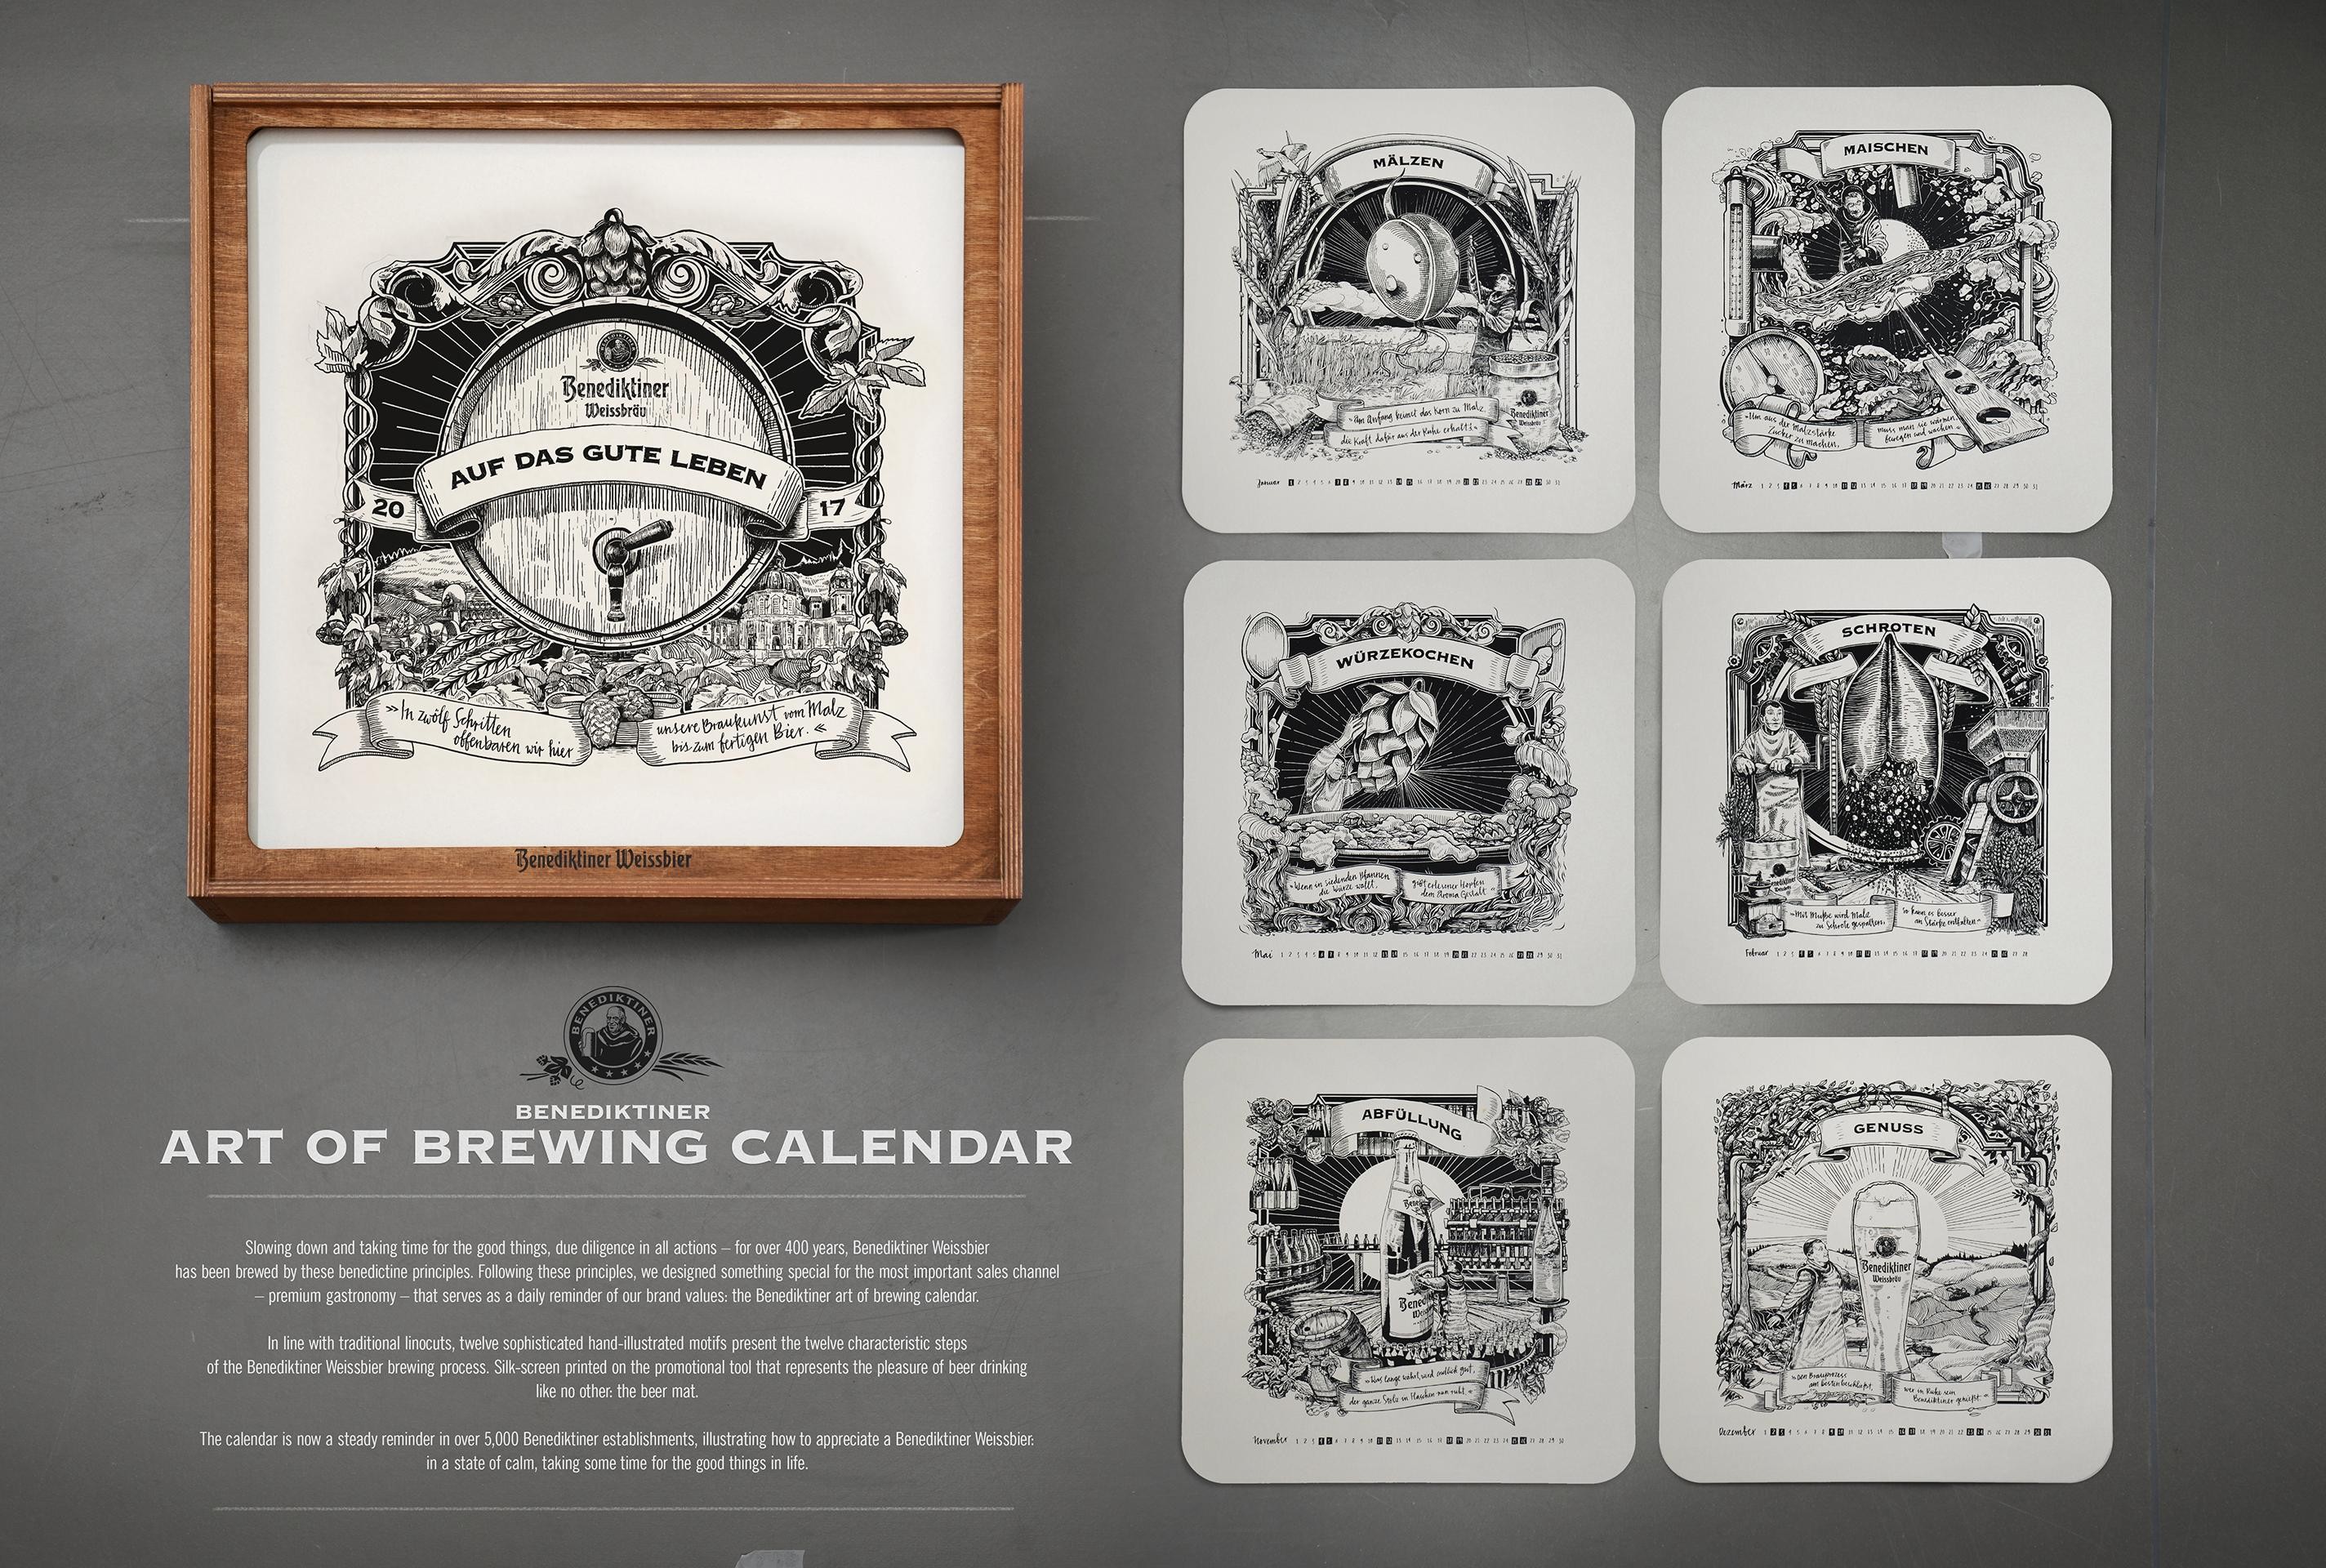 The Benediktiner art of brewing calendar.